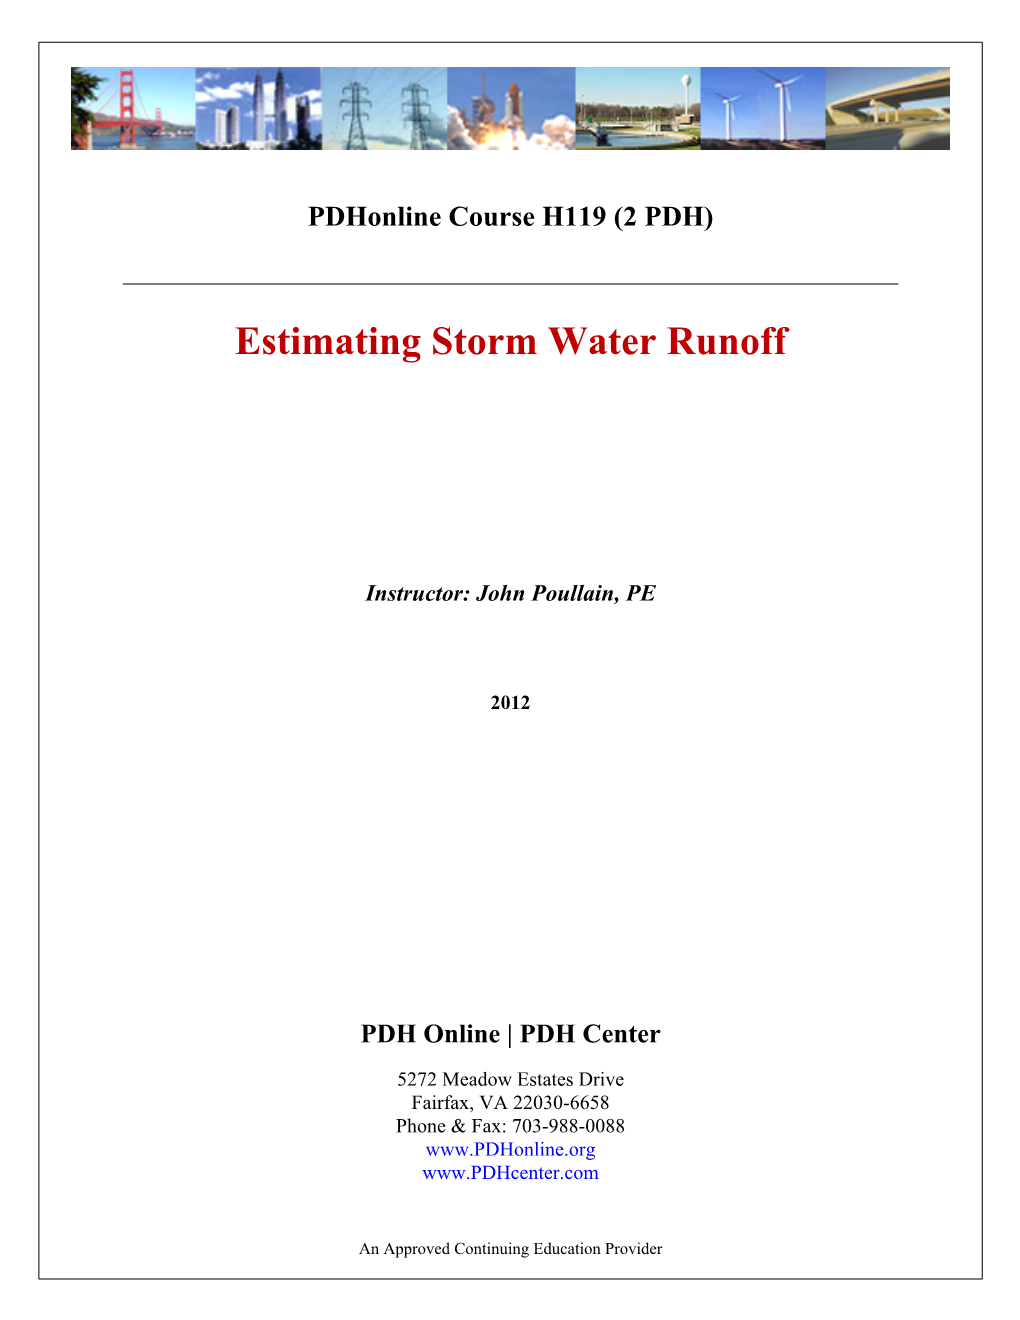 Estimating Storm Water Runoff